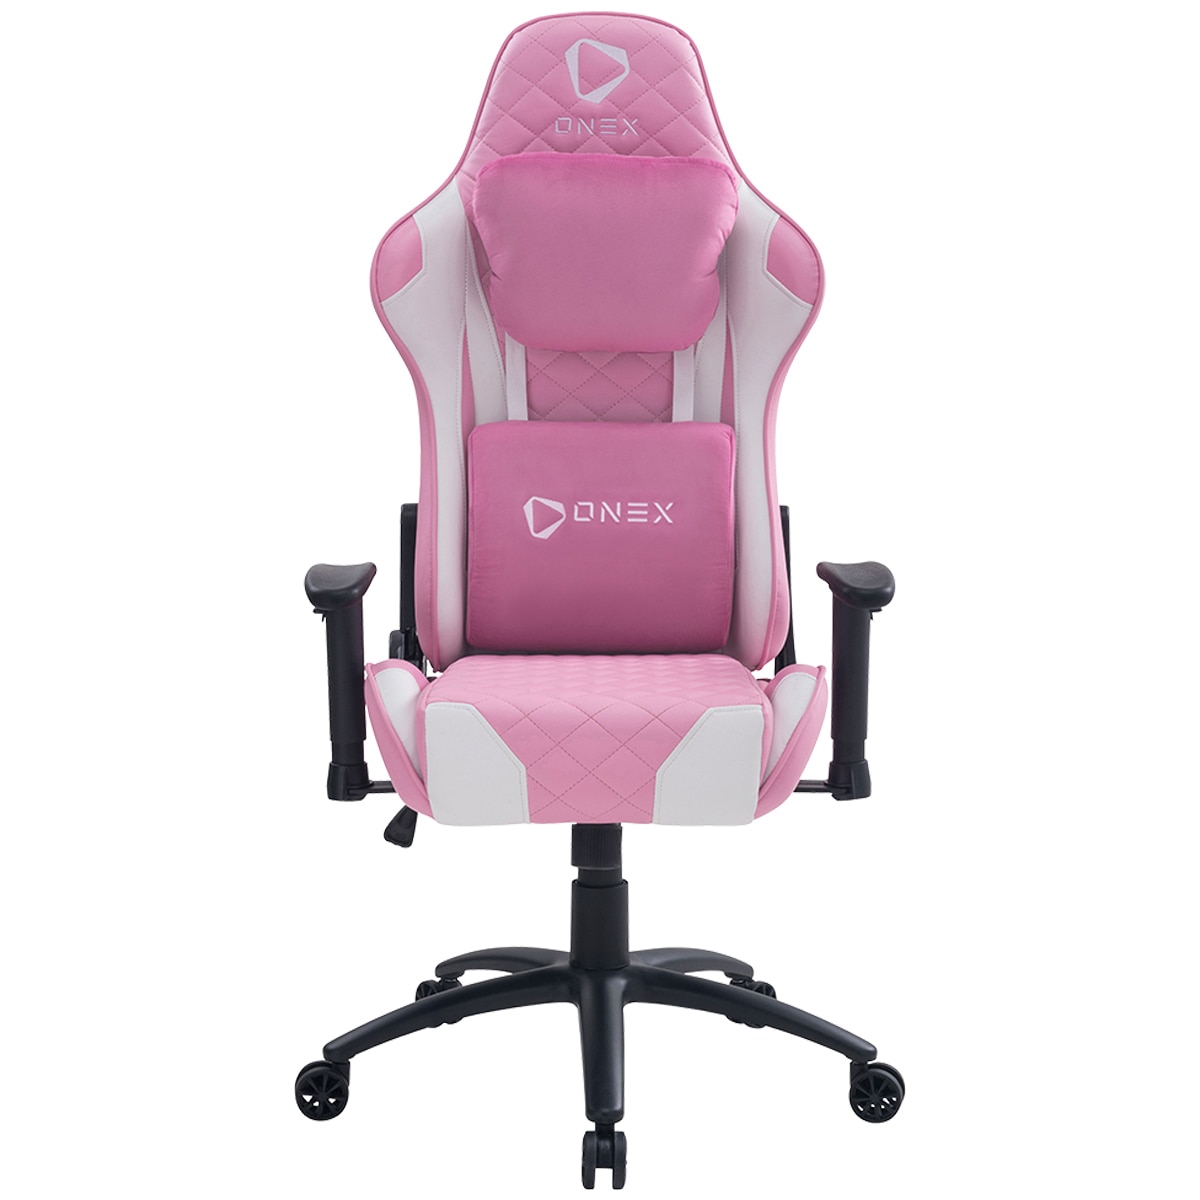 Onex G330 Series Gaming Chair Pink White Costco Australia